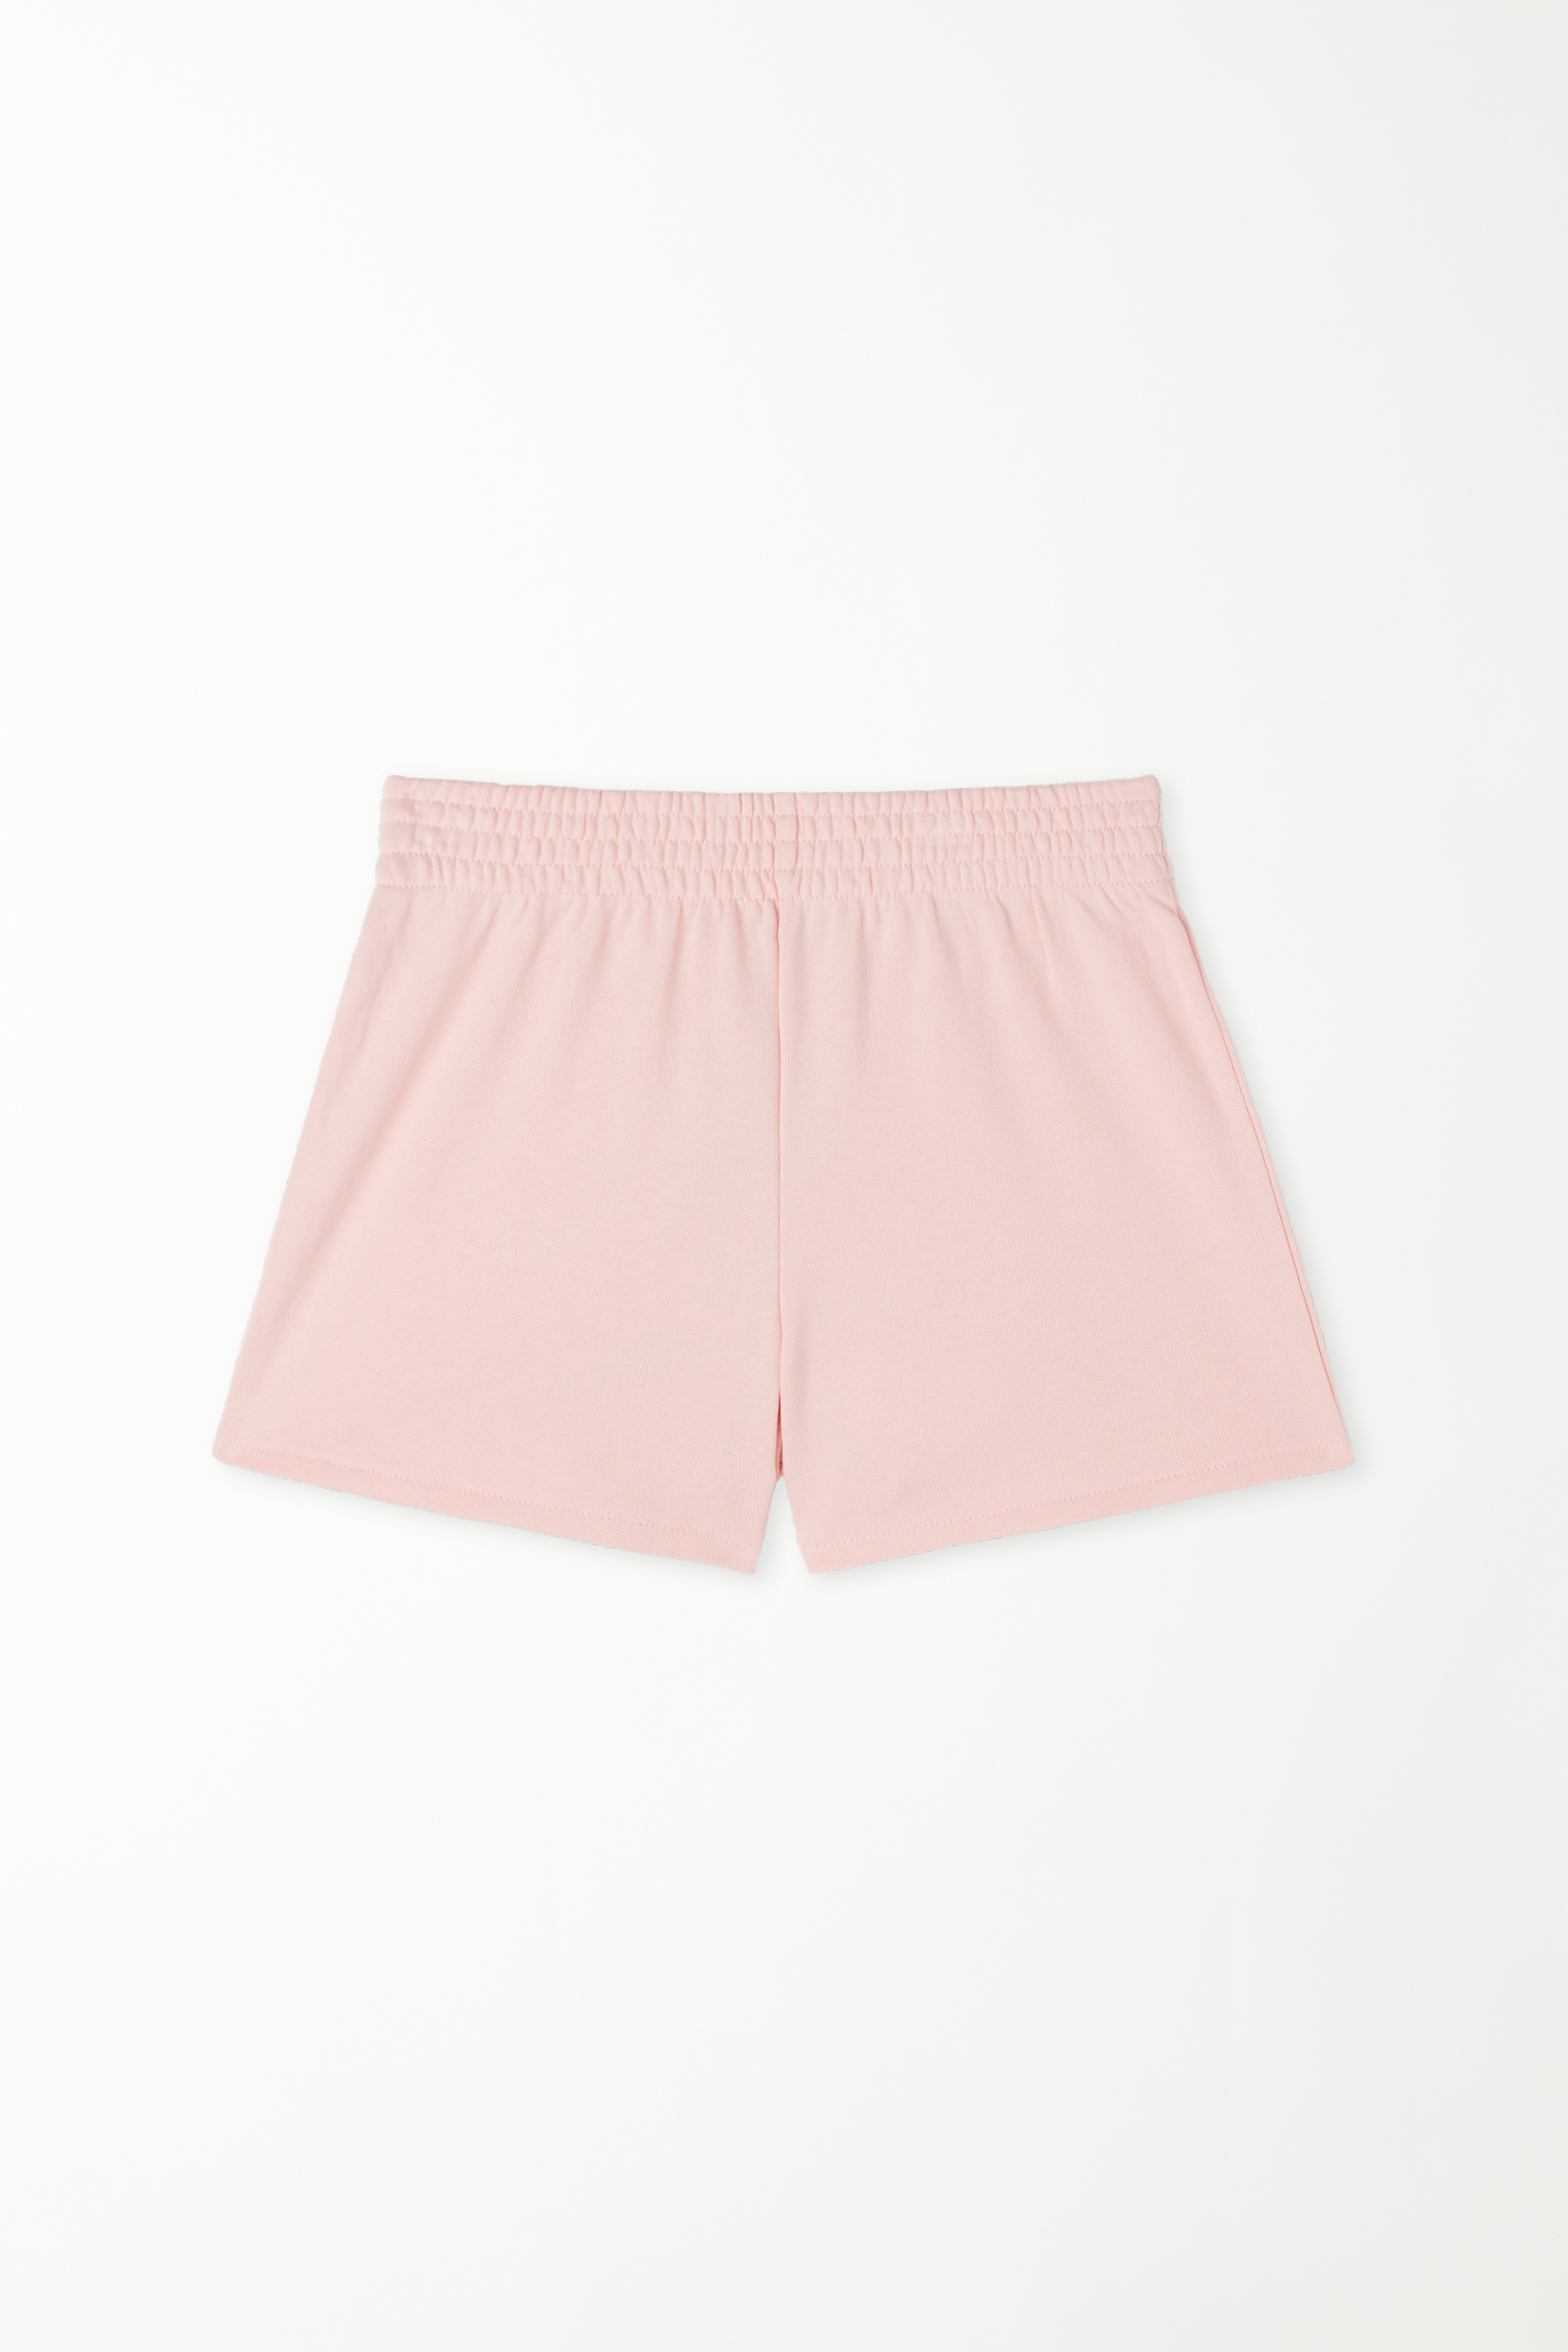 Girls’ Basic Cotton Fleece Shorts